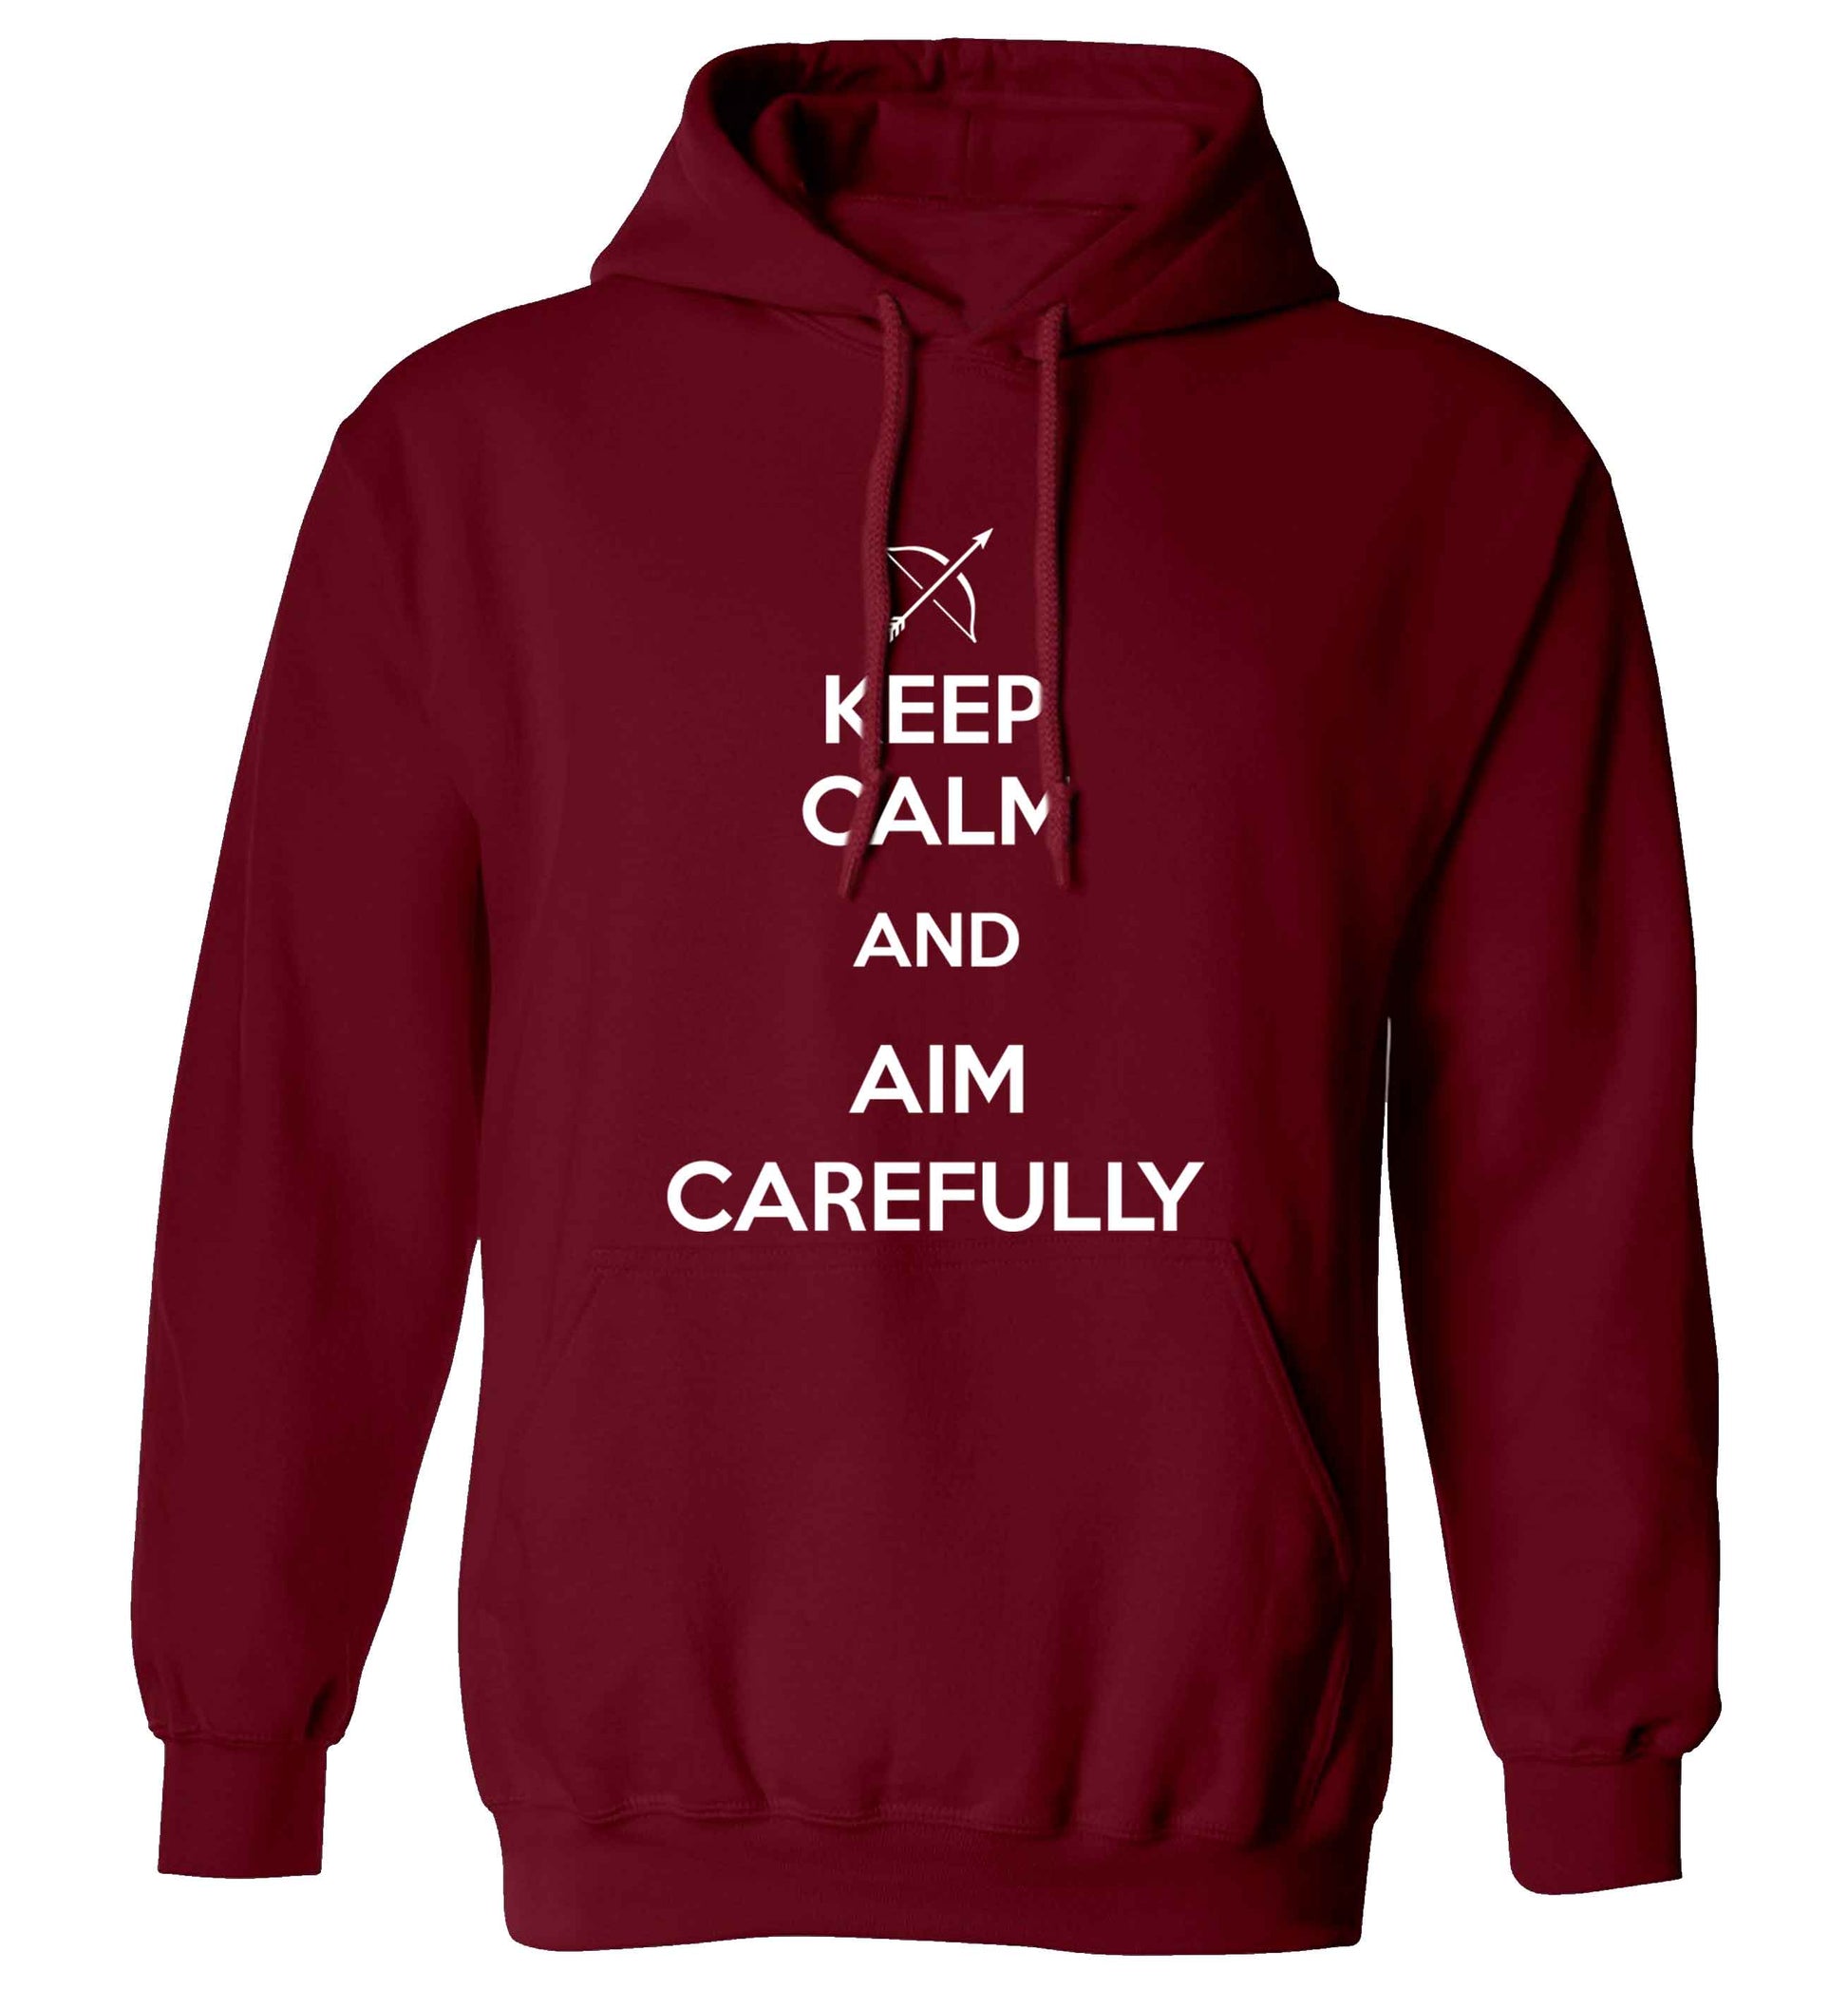 Keep calm and aim carefully adults unisex maroon hoodie 2XL